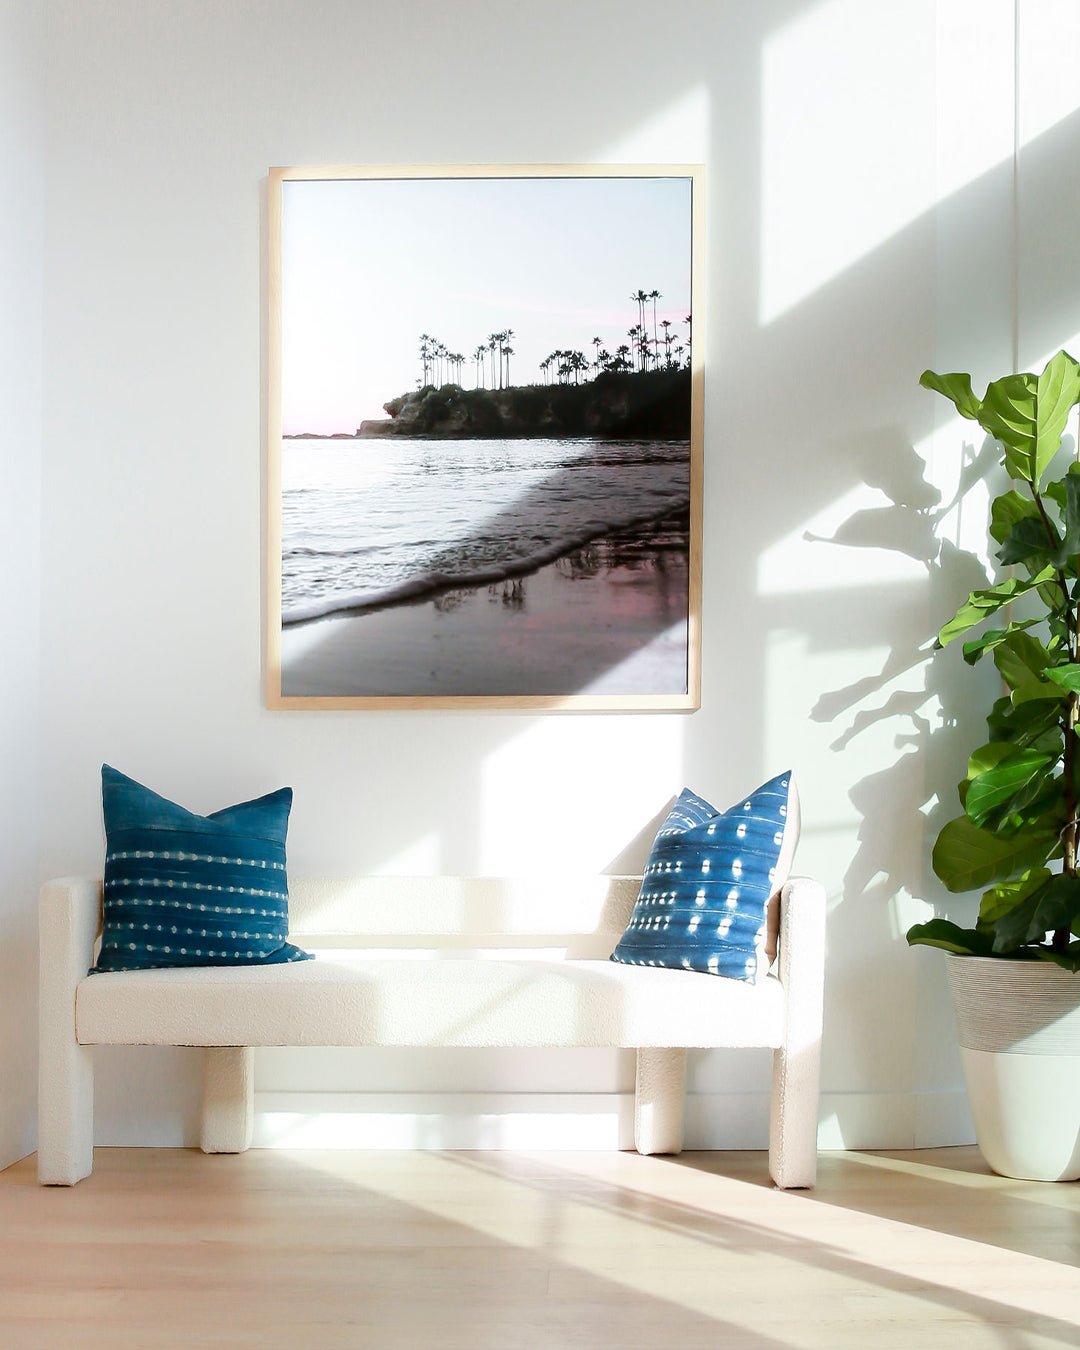 beachy interior with a framed image of laguna beach and a bench underneath